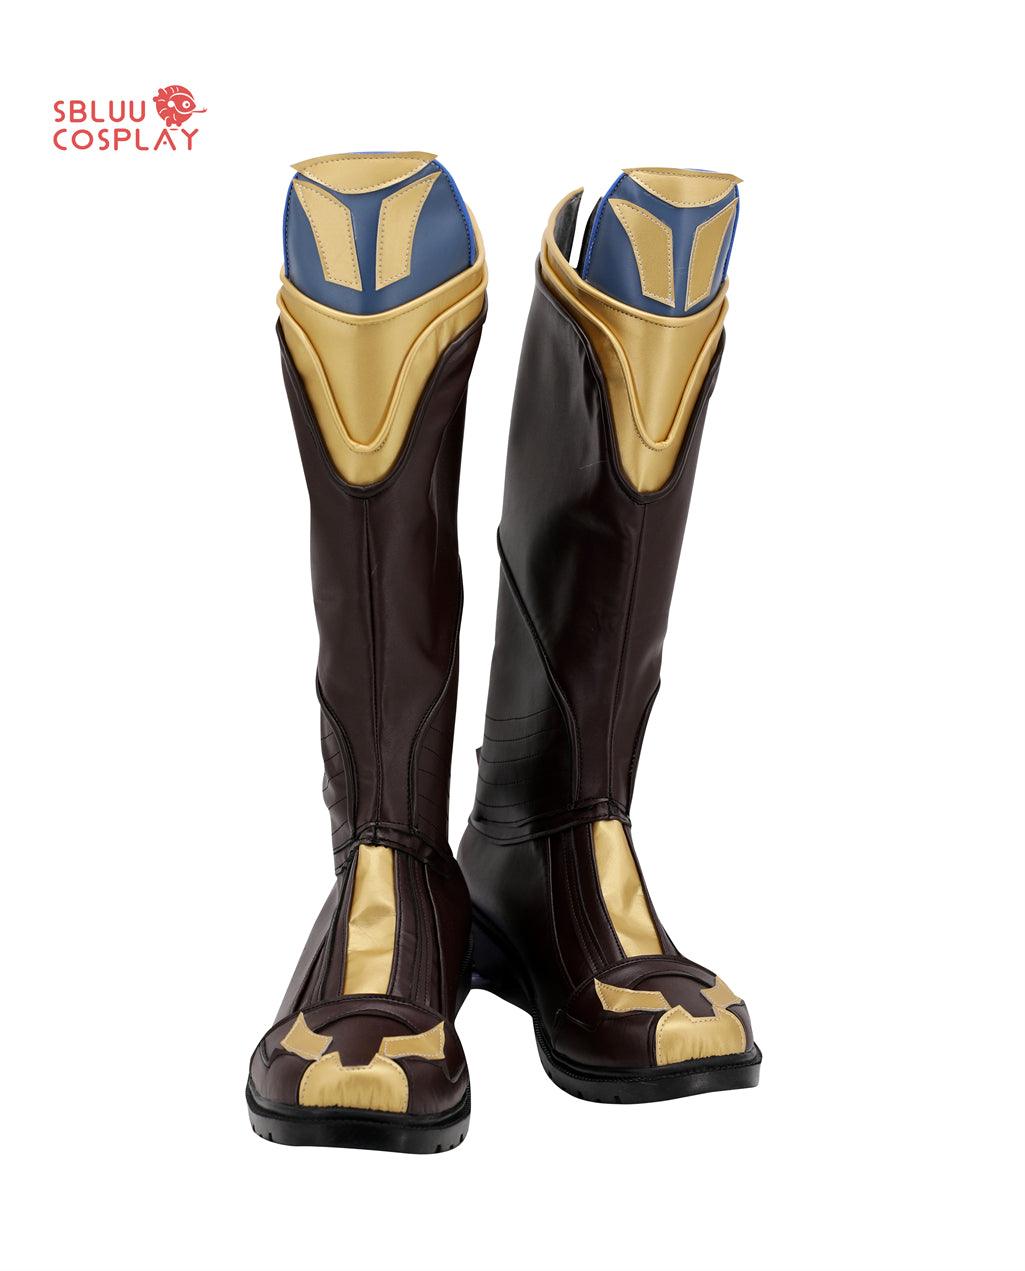 Avengers Infinity War Thanos Cosplay Shoes Custom Made Boots - SBluuCosplay